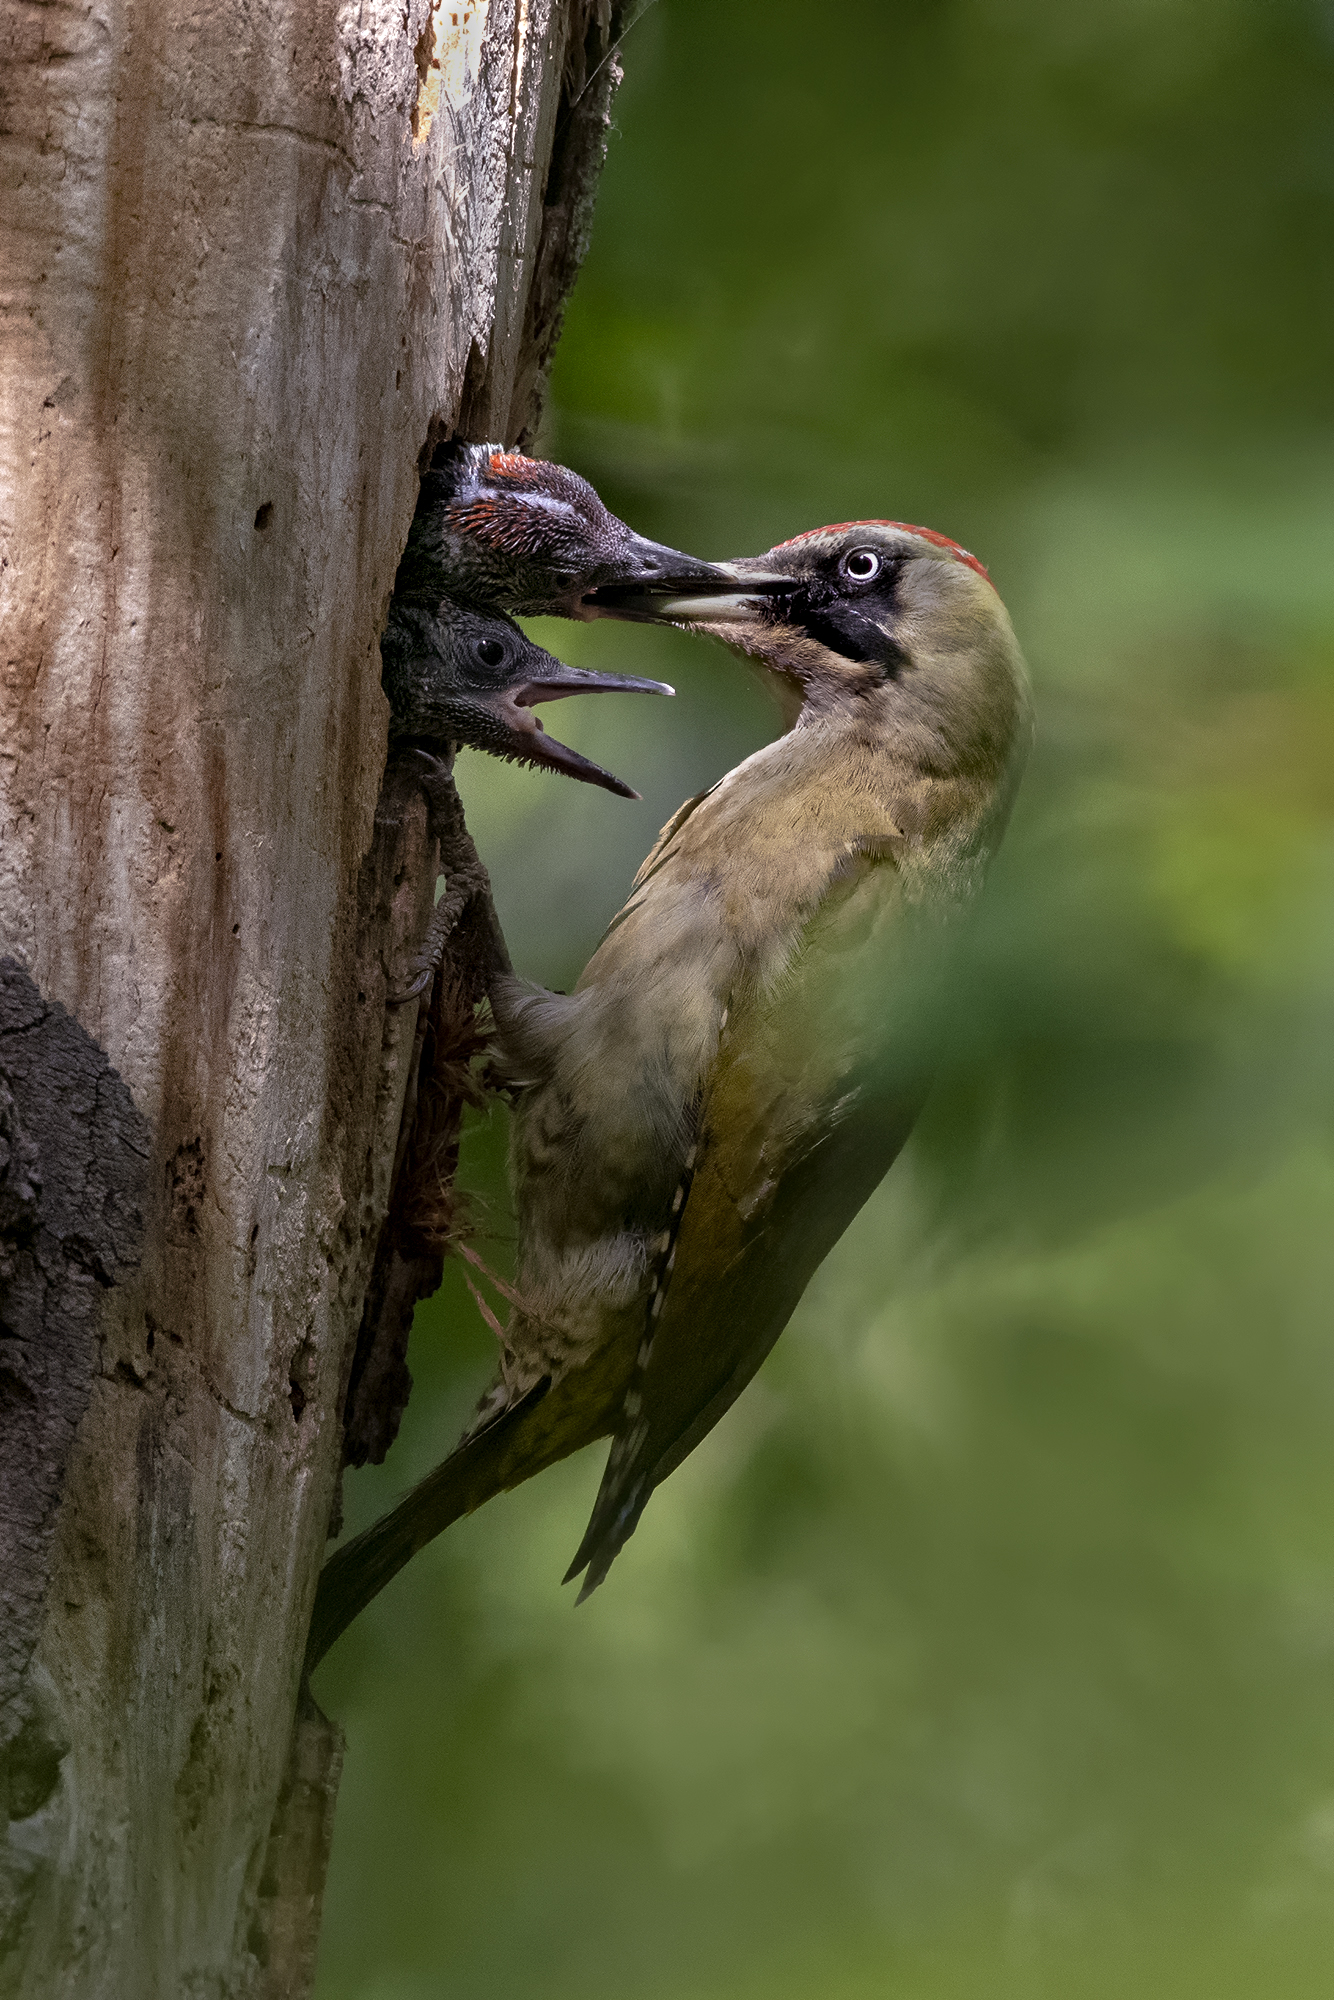 Green woodpecker nesting...